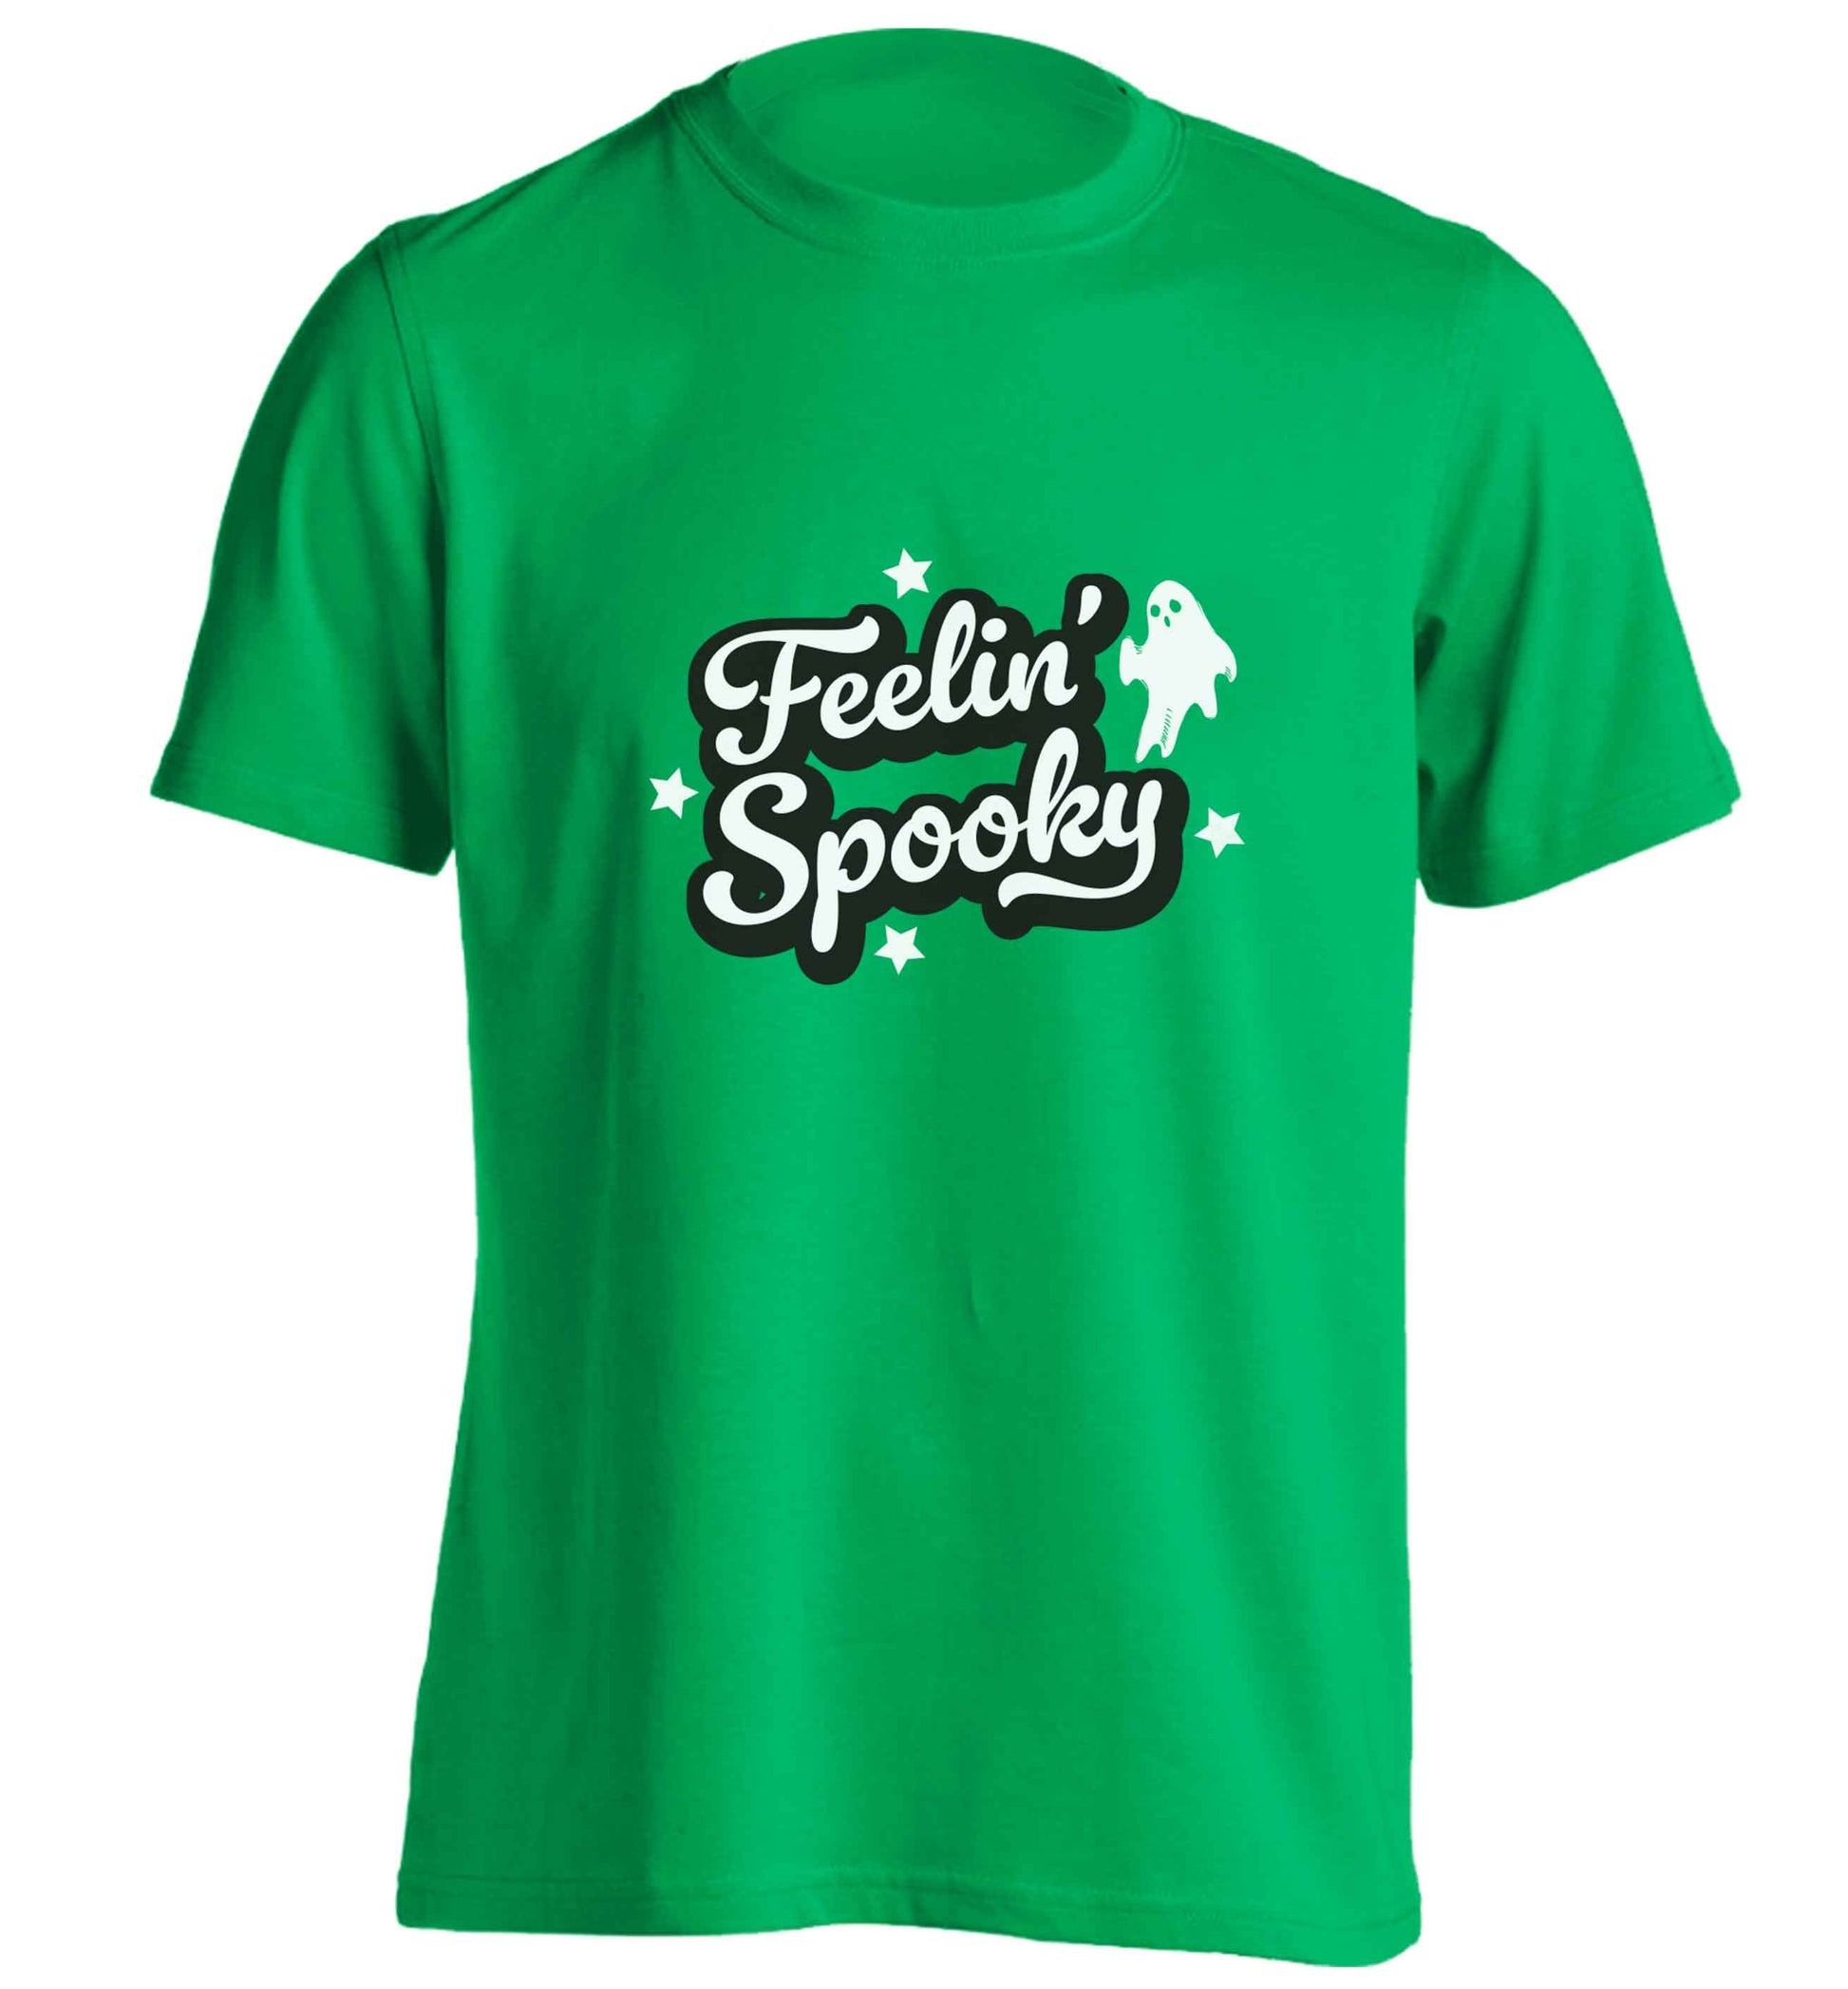 Feelin' Spooky Kit adults unisex green Tshirt 2XL